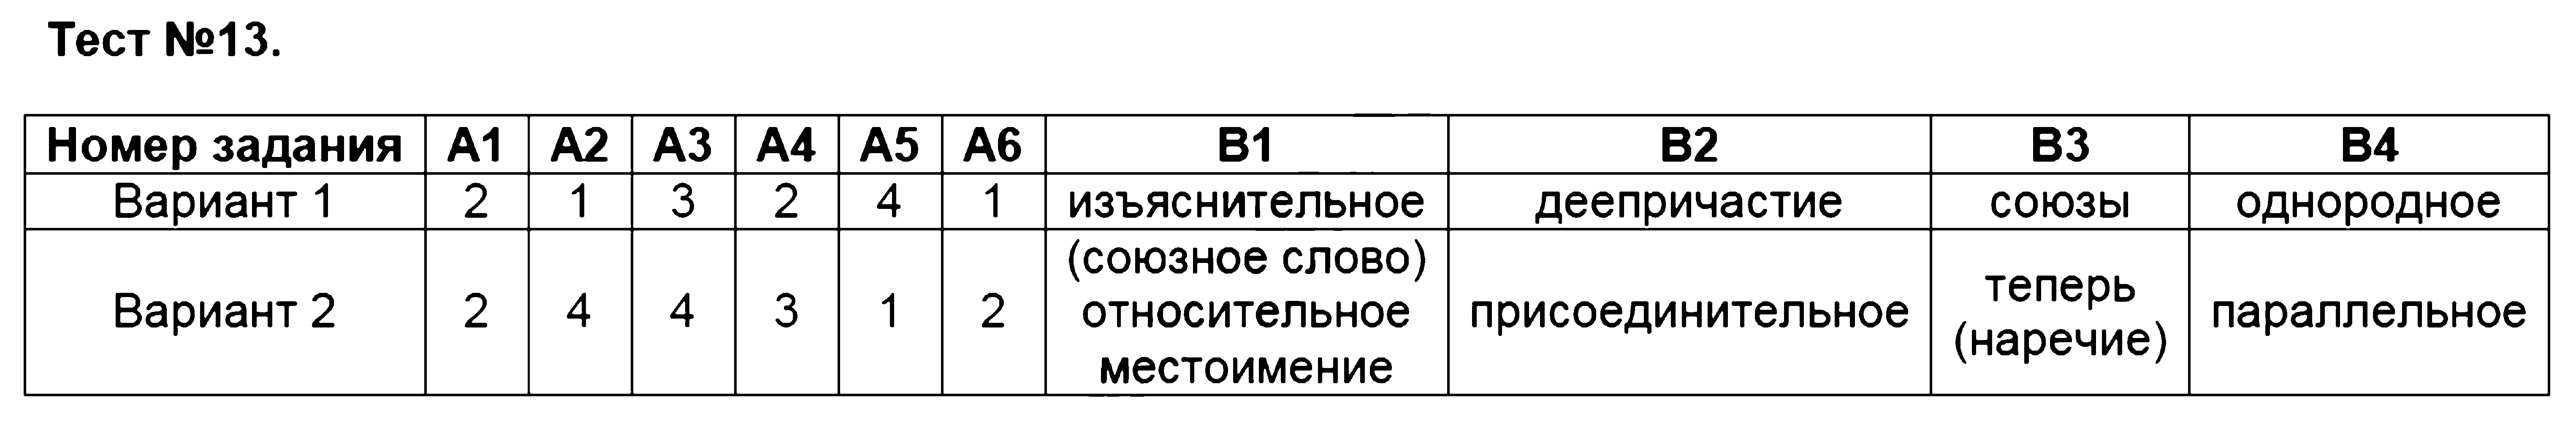 ГДЗ Русский язык 9 класс - Тест 13